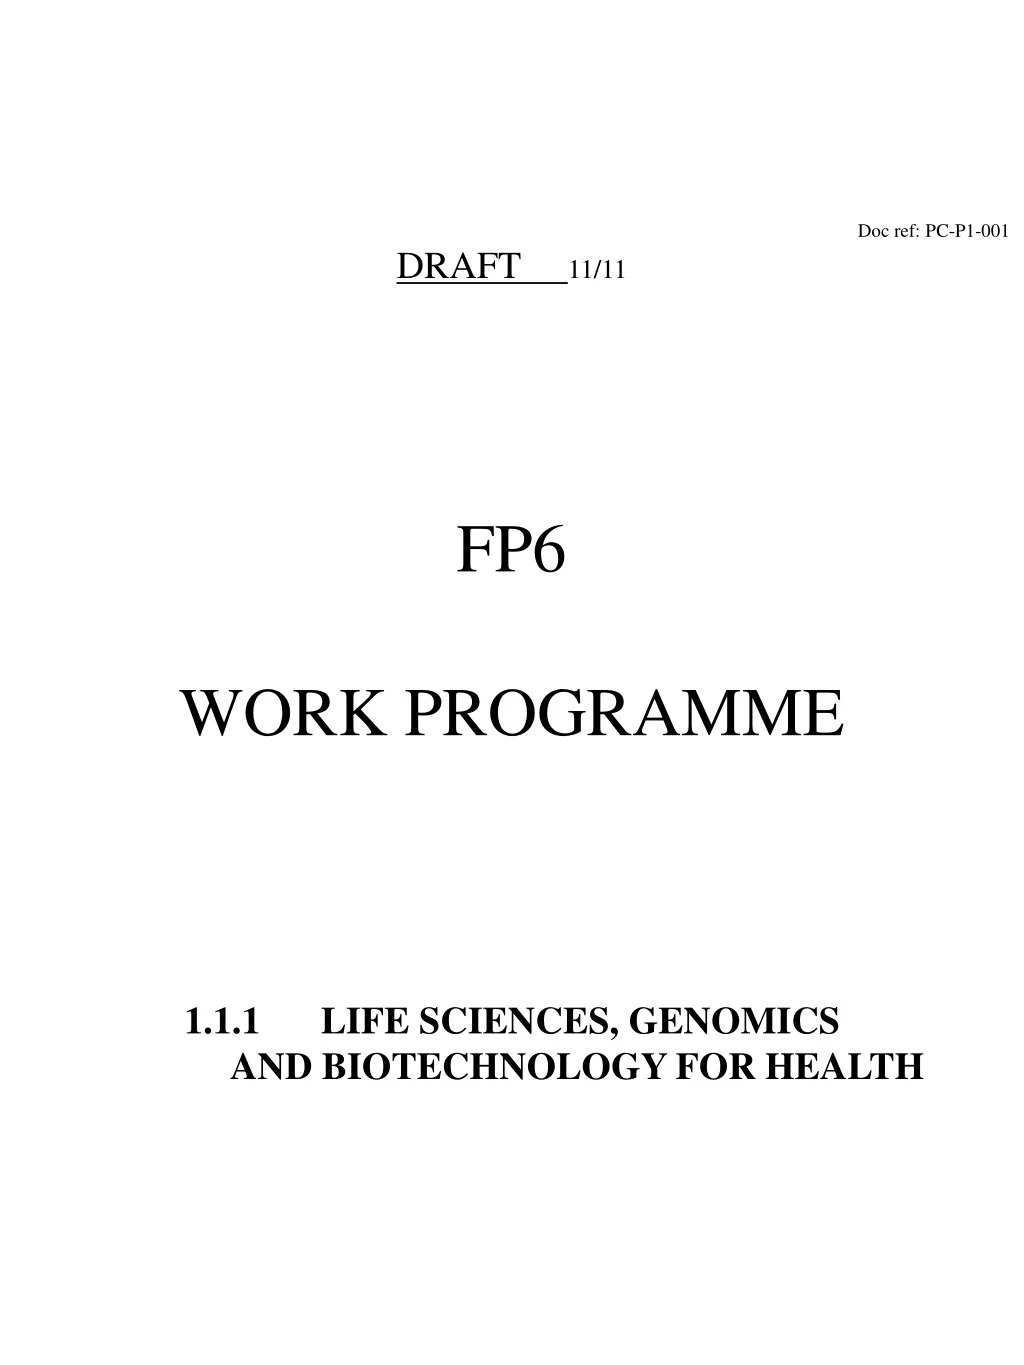 doc ref pc p1 001 draft 11 11 fp6 work programme